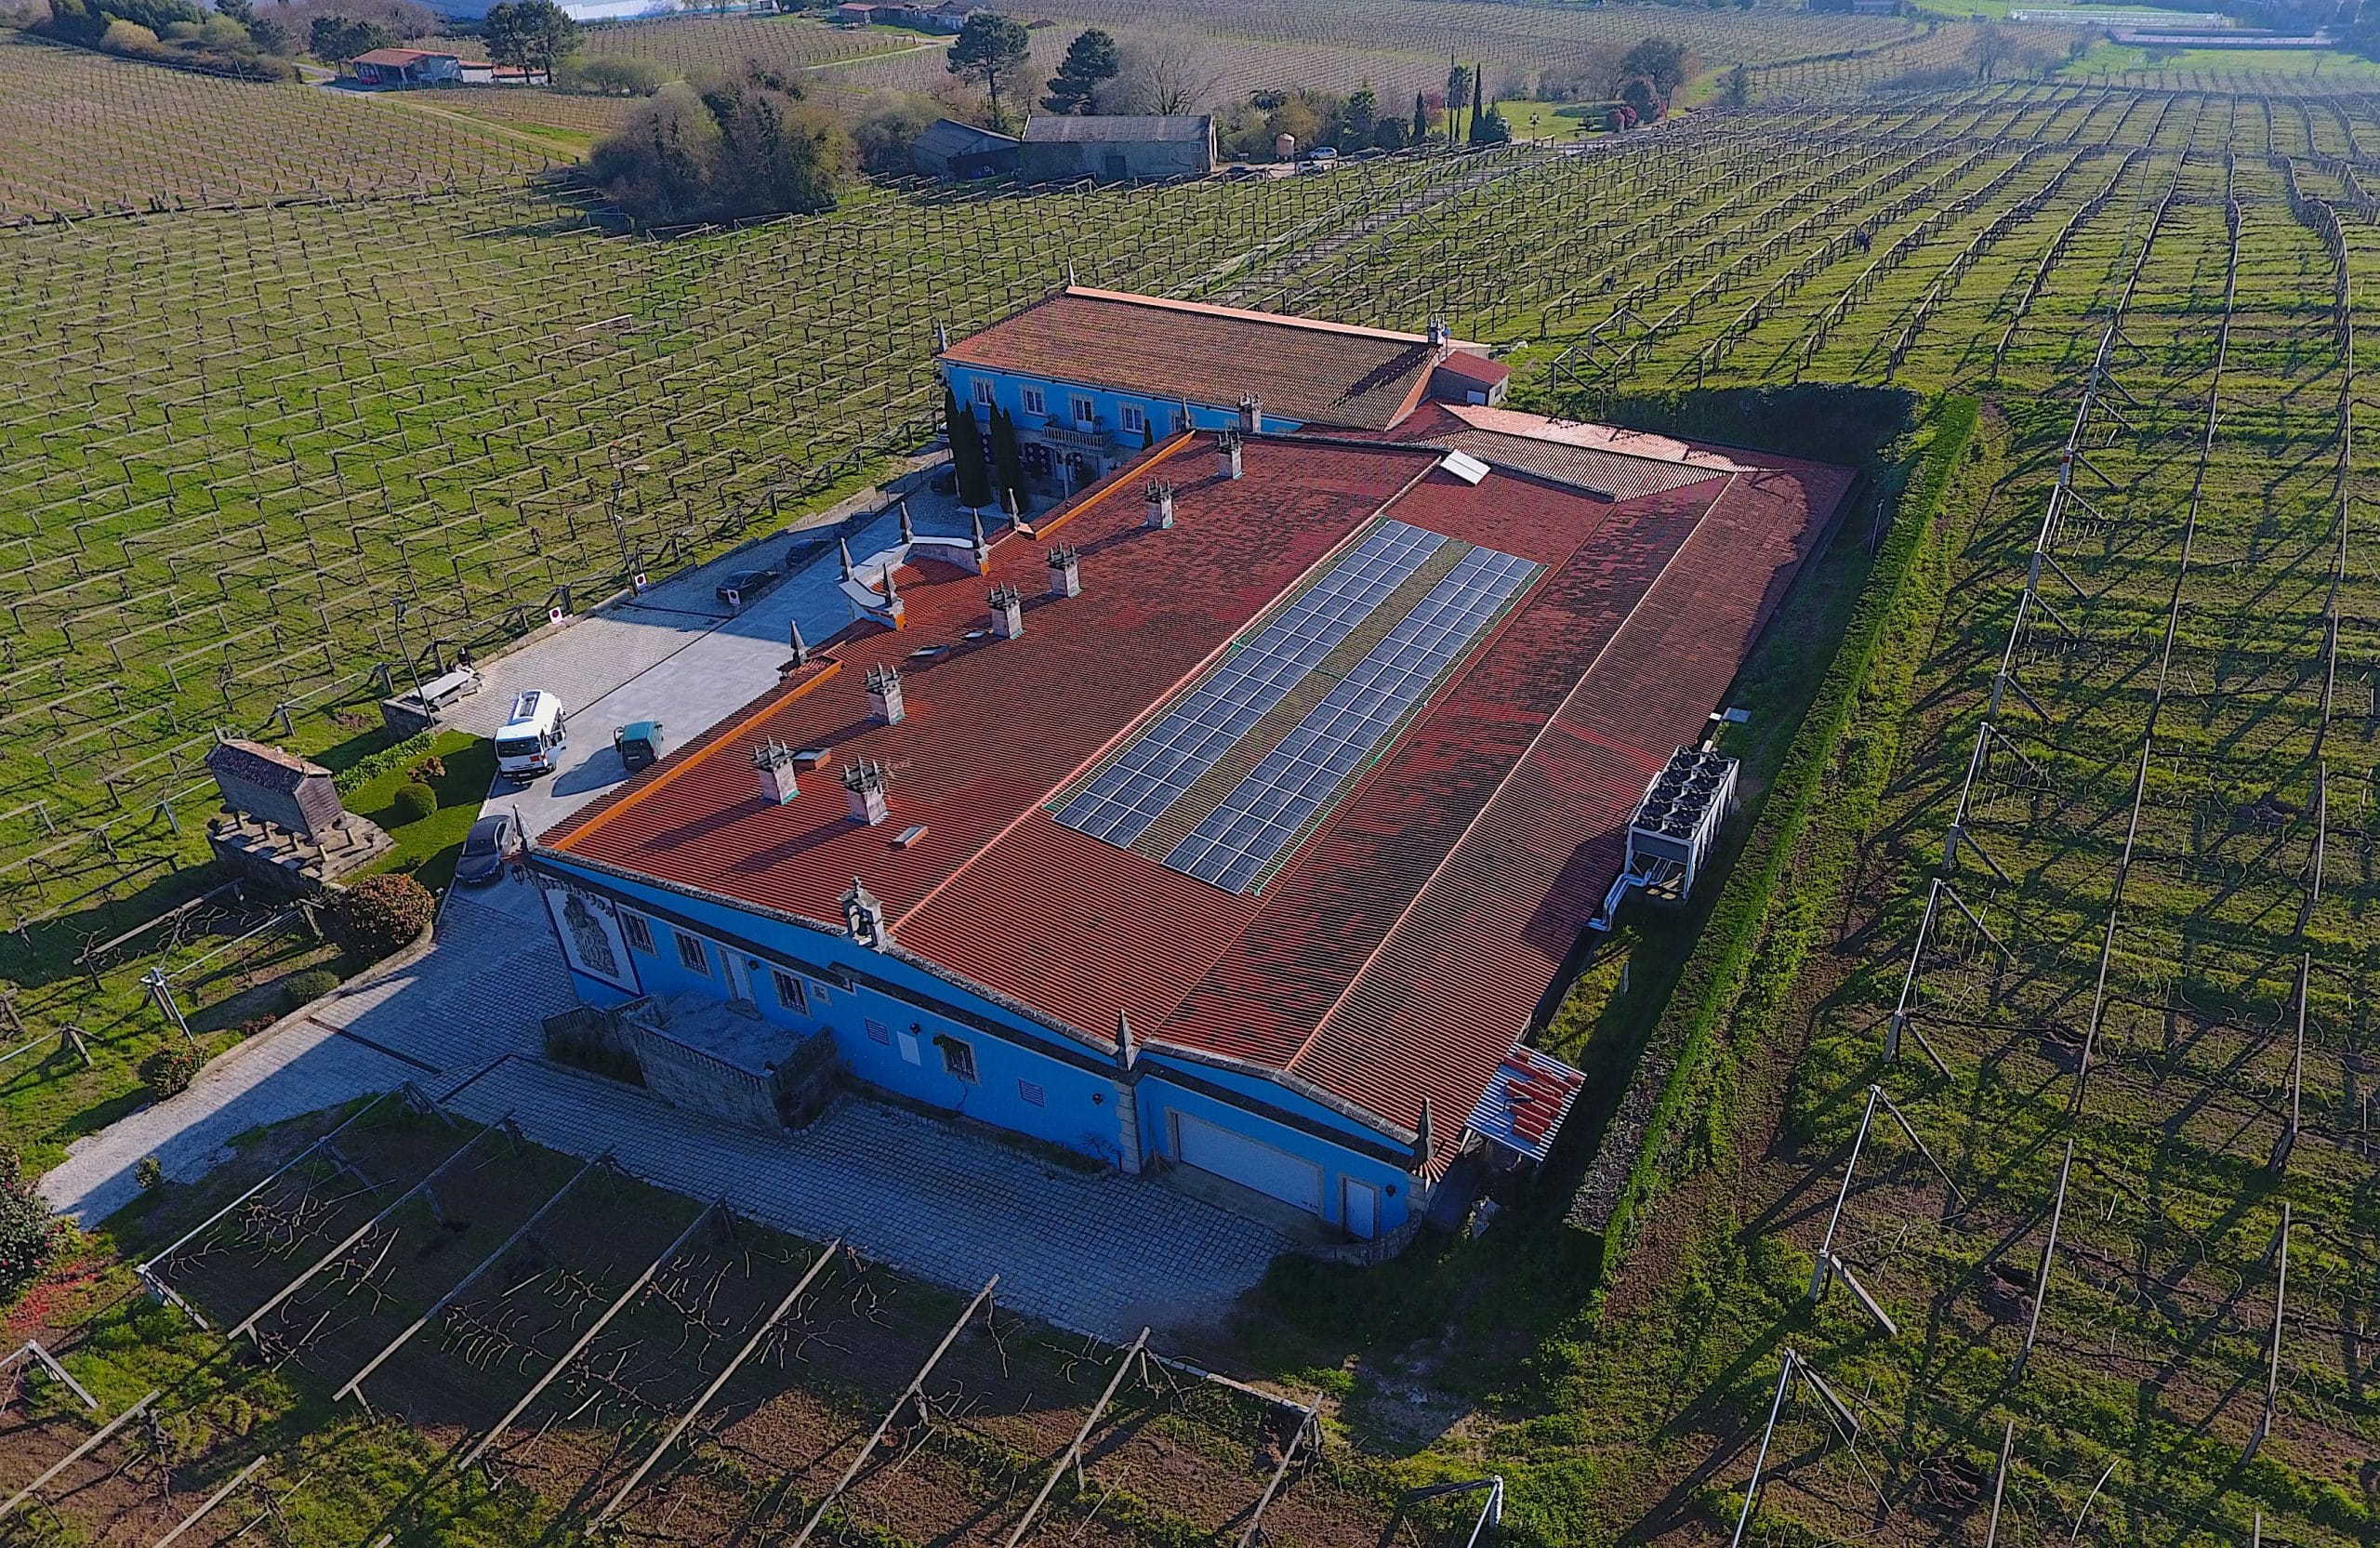 instalación fotovoltaica para autoconsumo en bodega vinícola